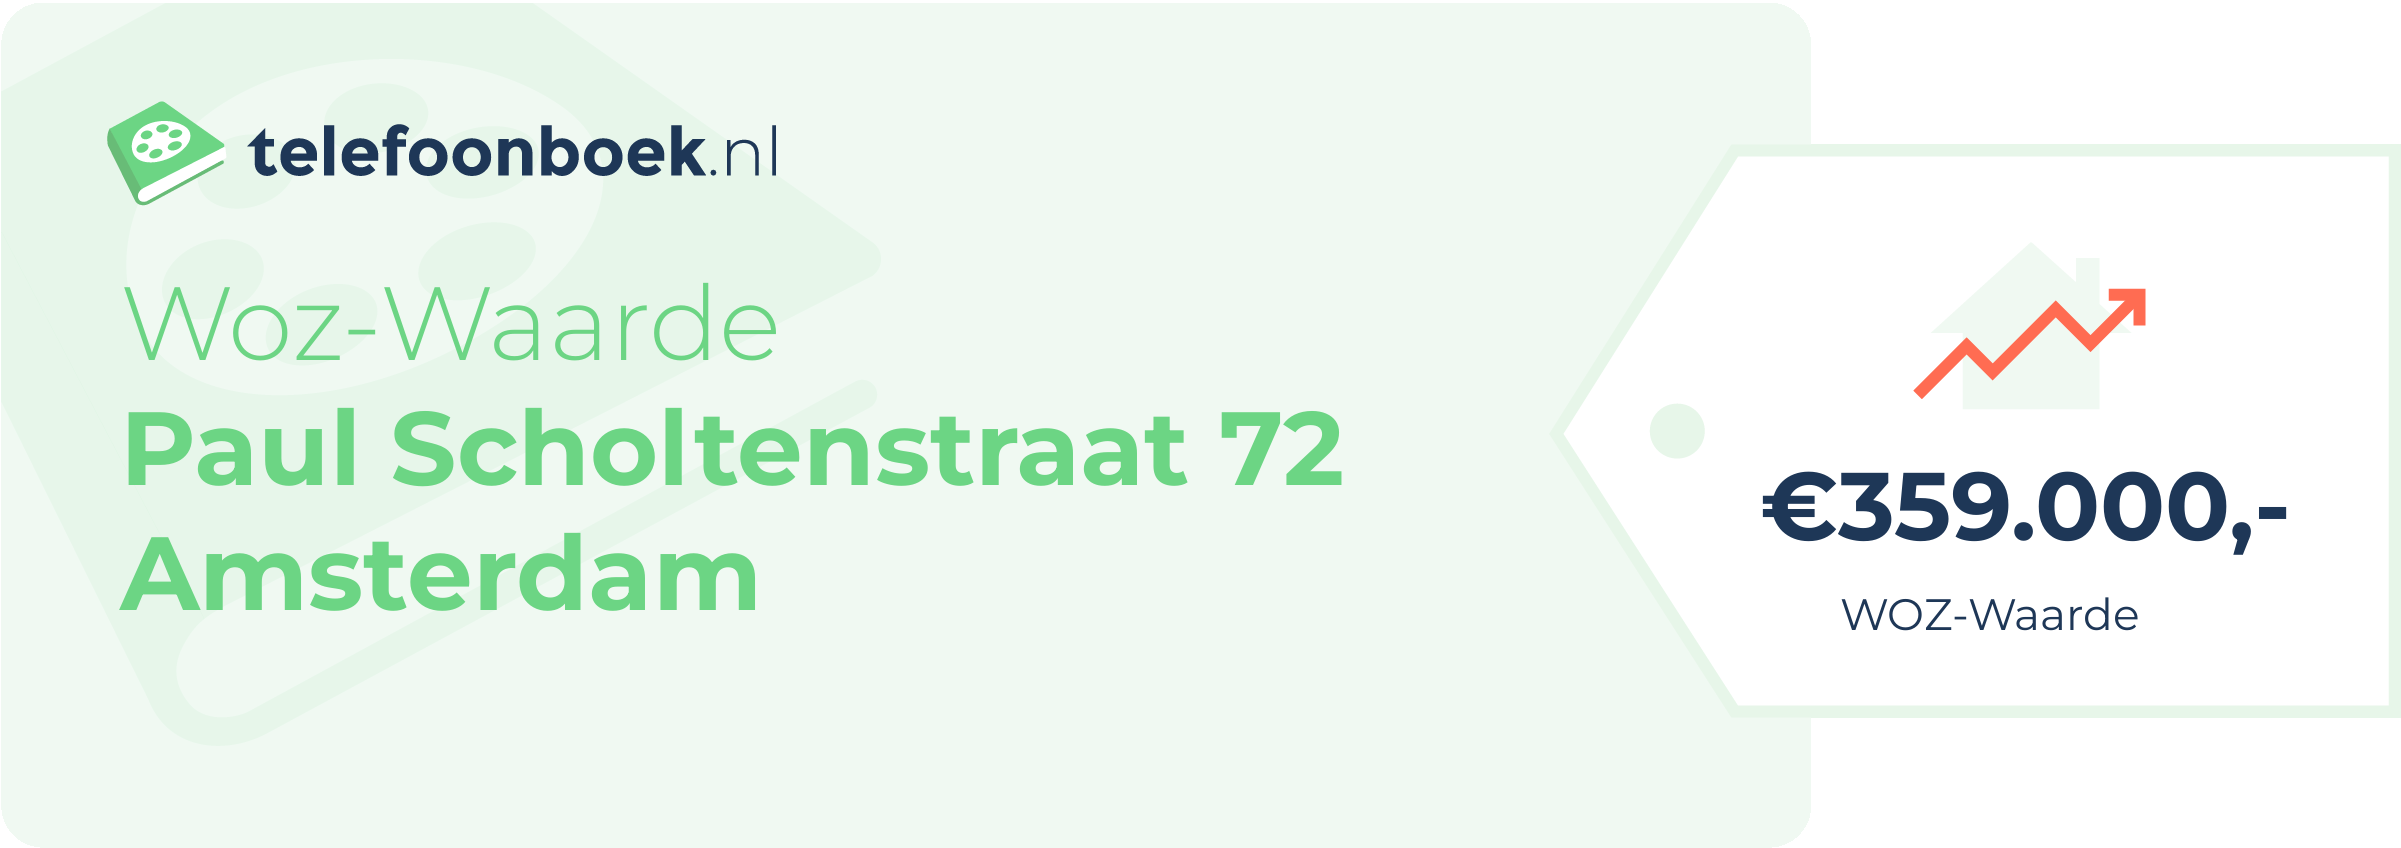 WOZ-waarde Paul Scholtenstraat 72 Amsterdam